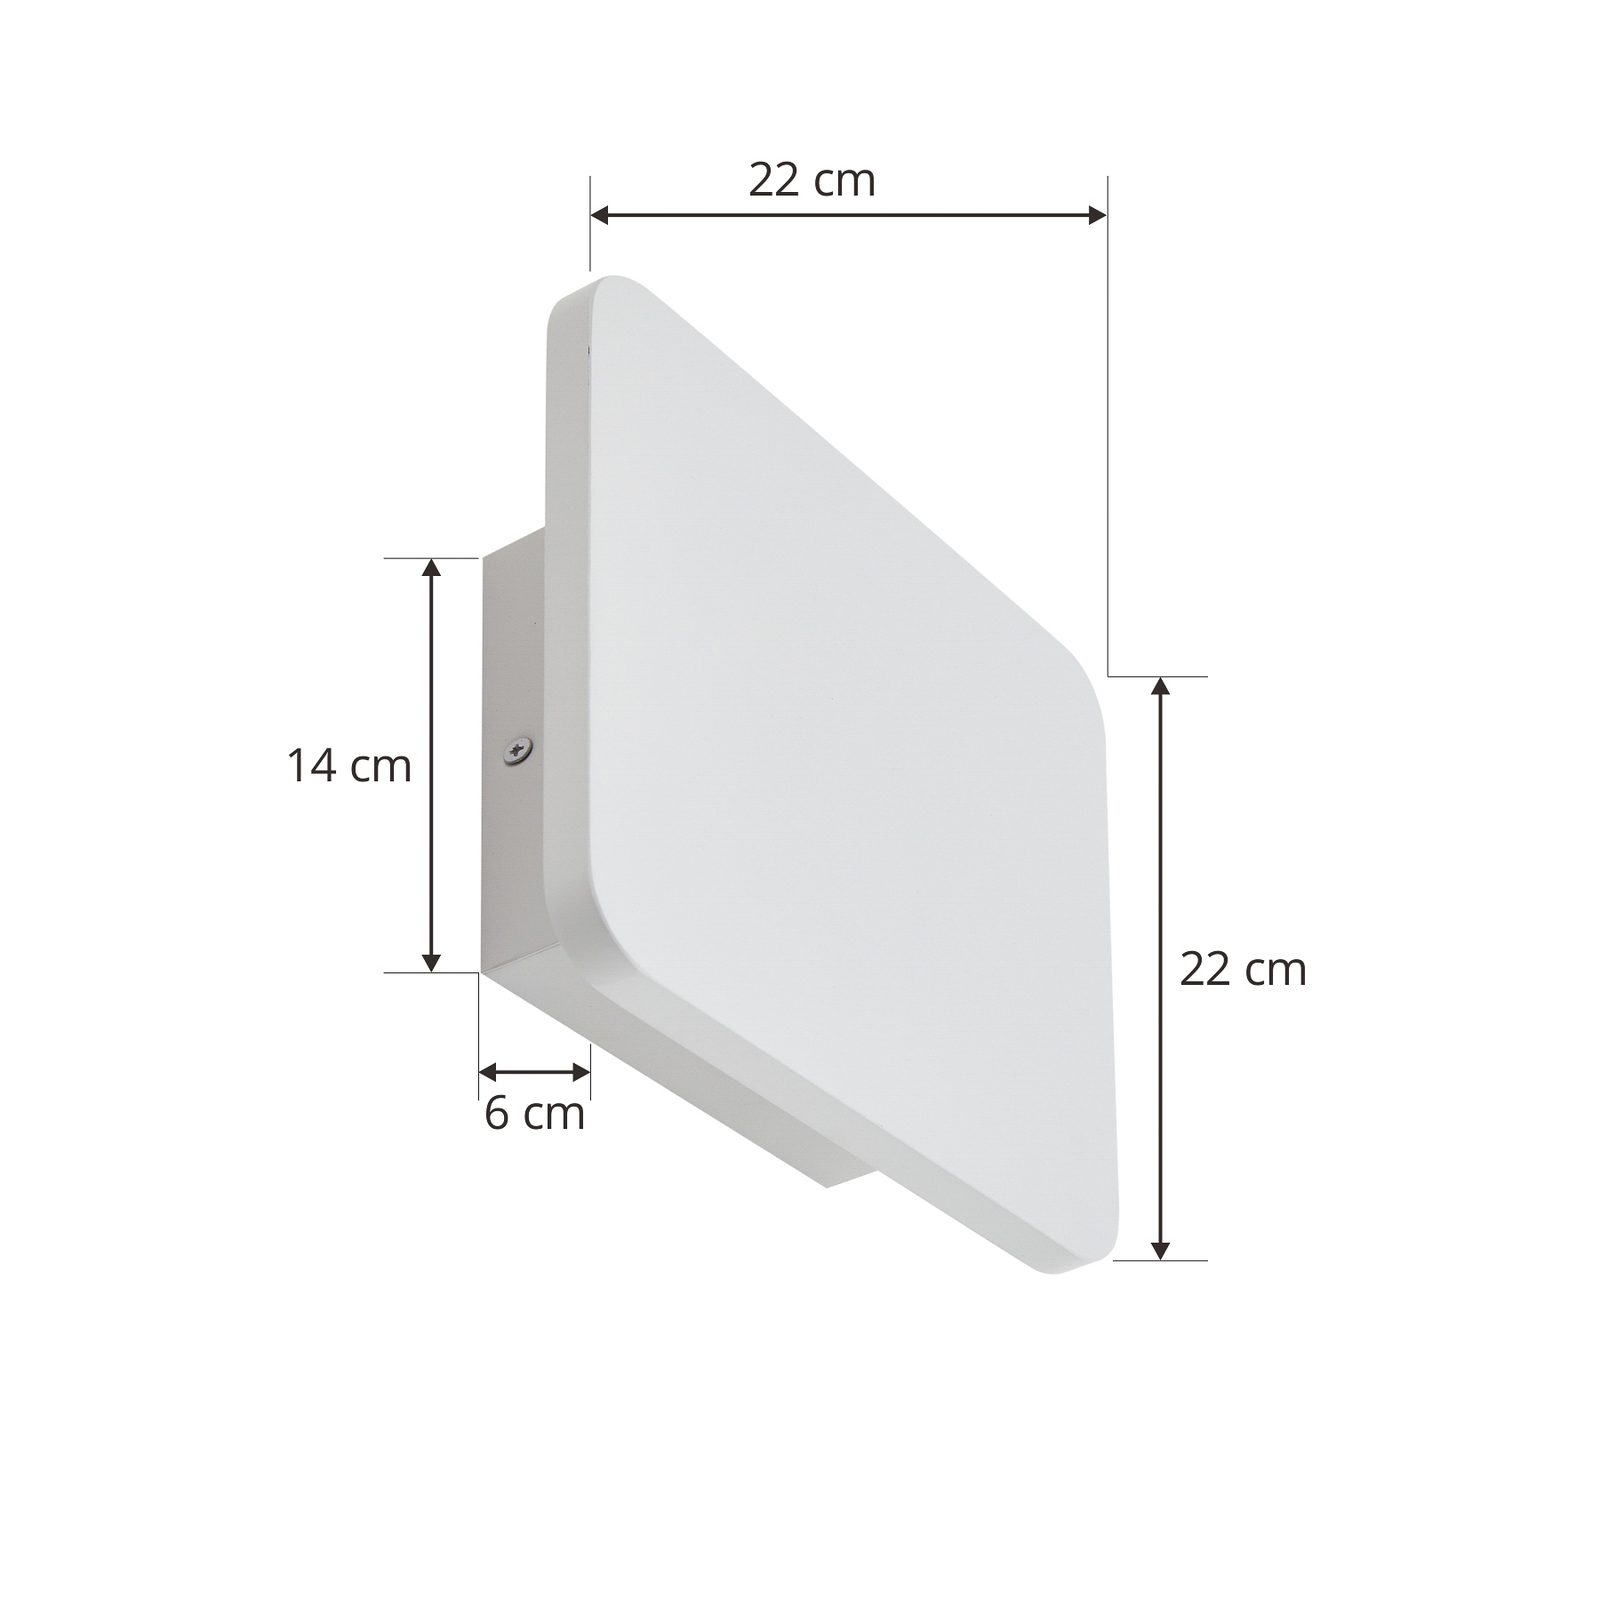 Lucande LED wall light Elrik, white, 22 cm high, metal